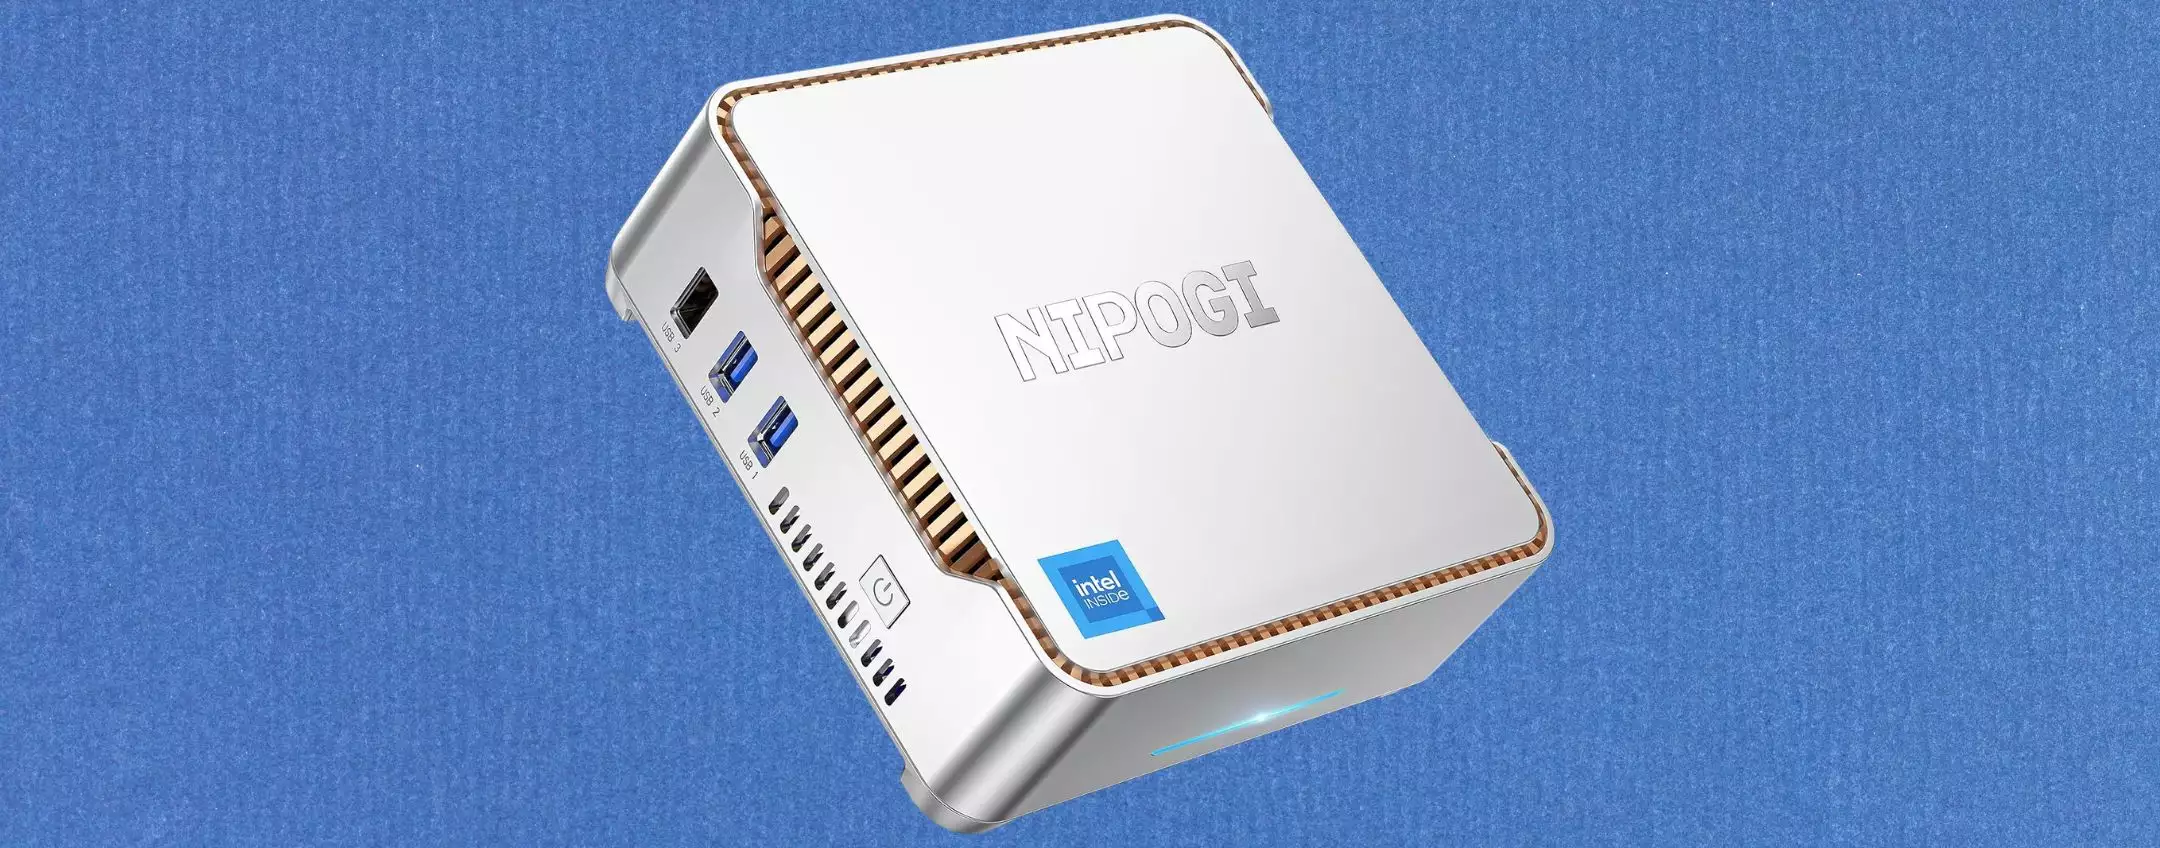 Mini PC Nipogi nuova offerta Amazon